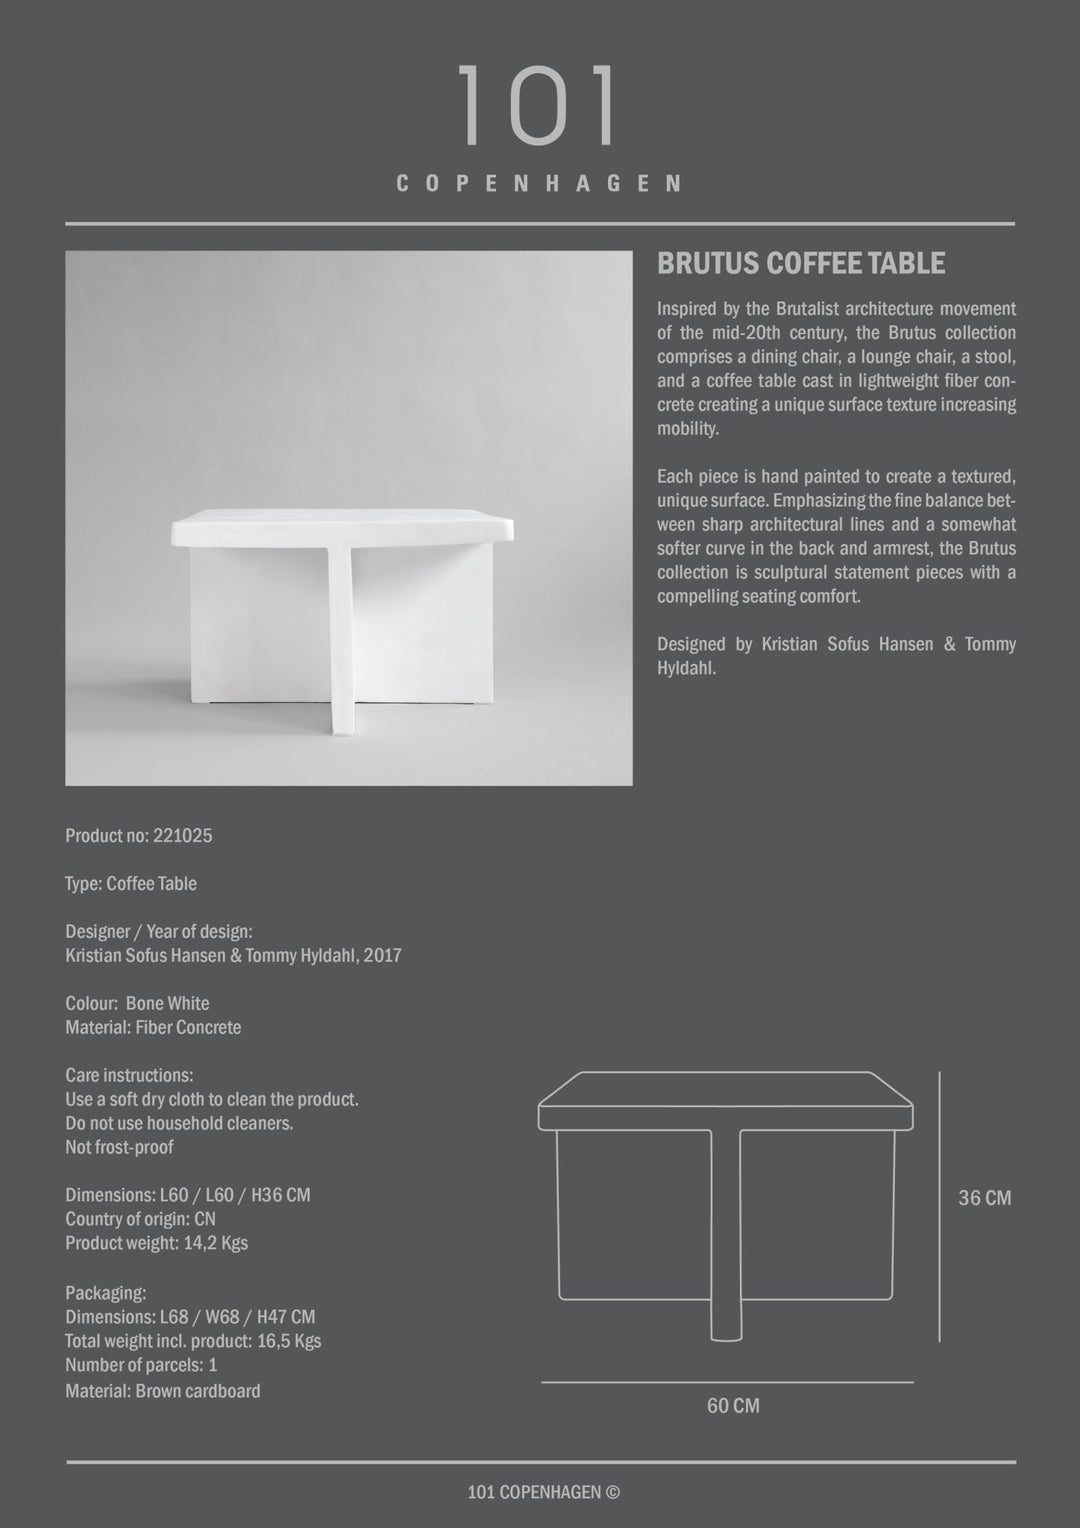 101 Copenhagen Brutus Coffee Table - $845.00